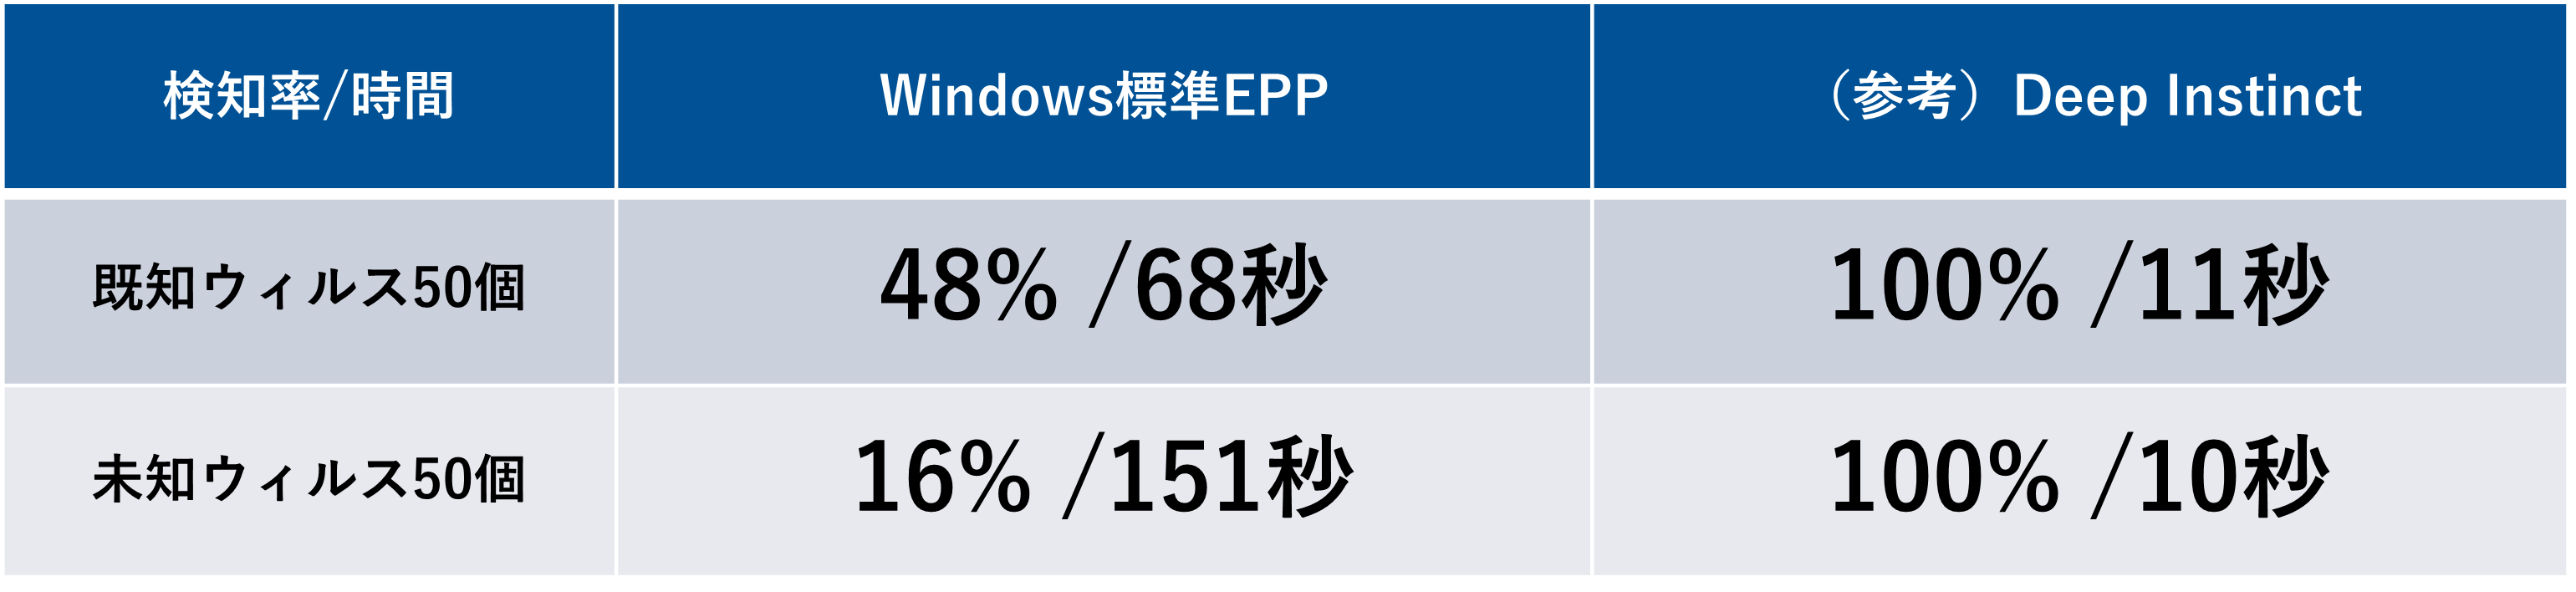 EPP検出テスト結果比較表